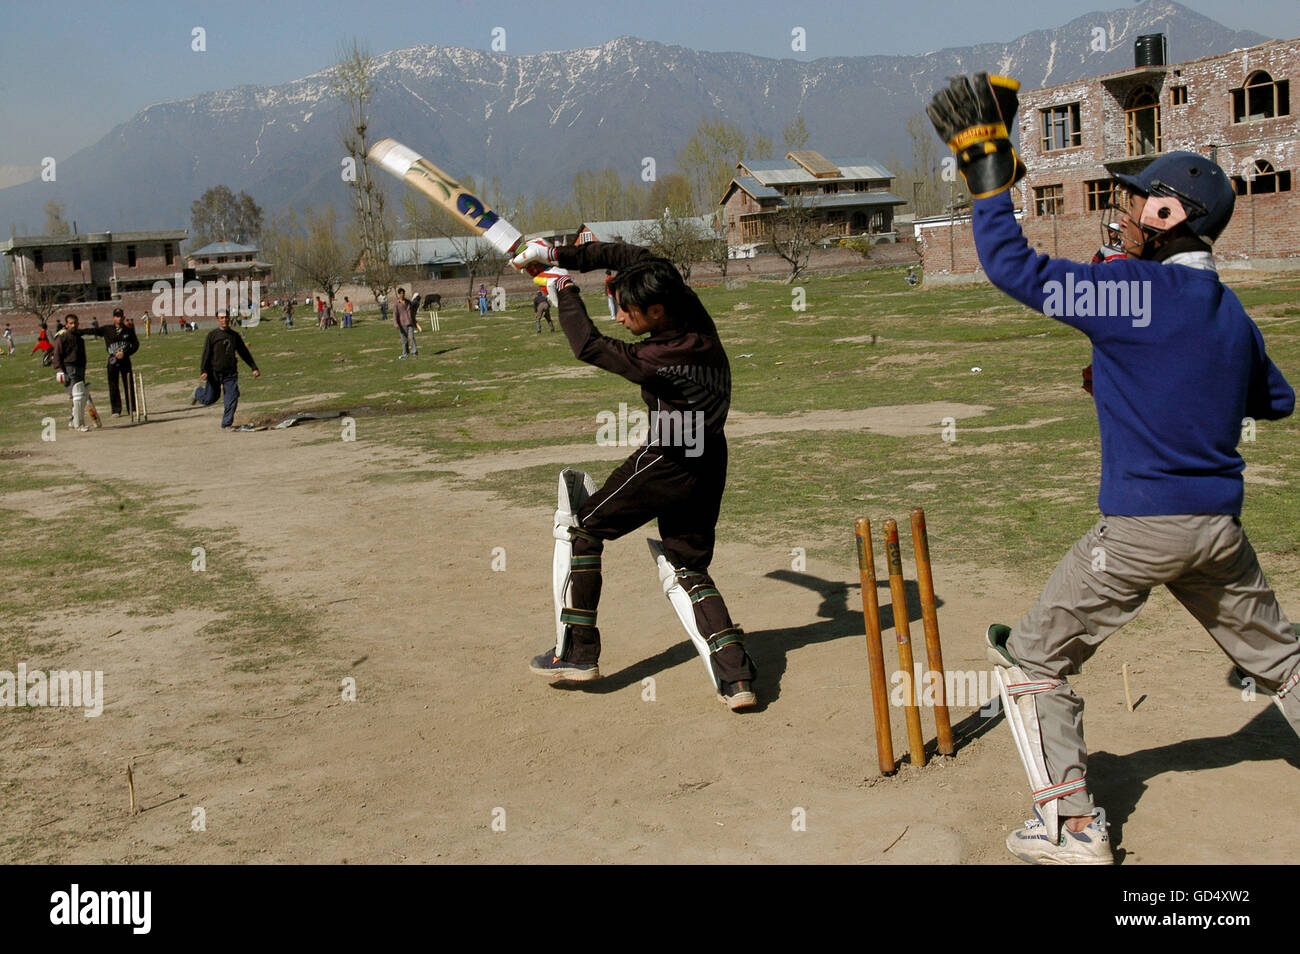 Kids enjoying the game of cricket Stock Photo